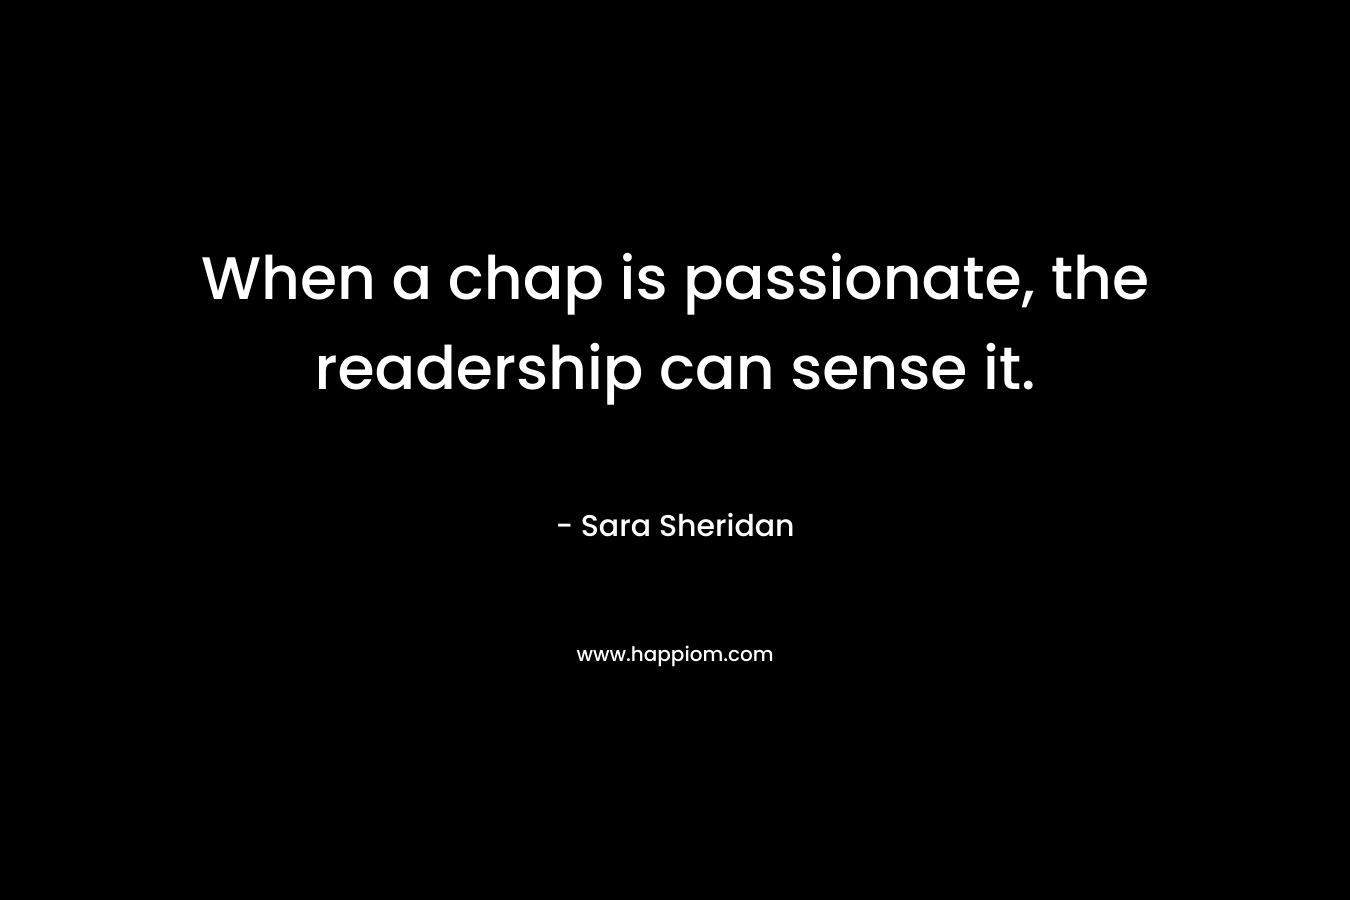 When a chap is passionate, the readership can sense it. – Sara Sheridan